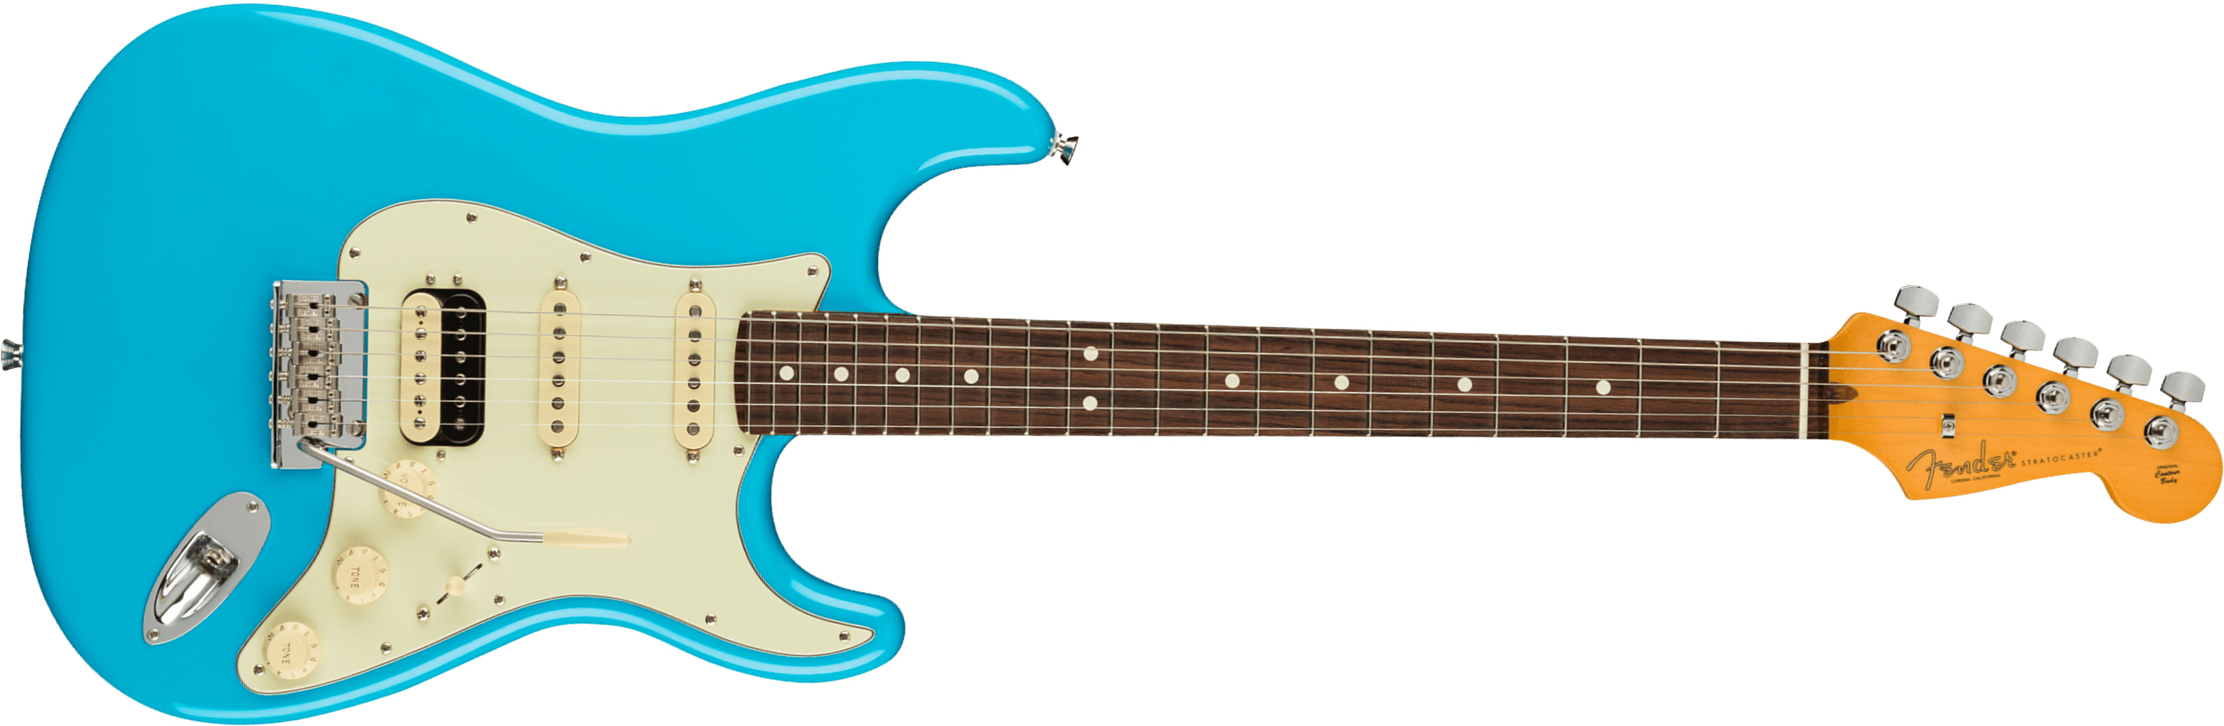 Fender Strat American Professional Ii Hss Usa Rw - Miami Blue - Guitare Électrique Forme Str - Main picture